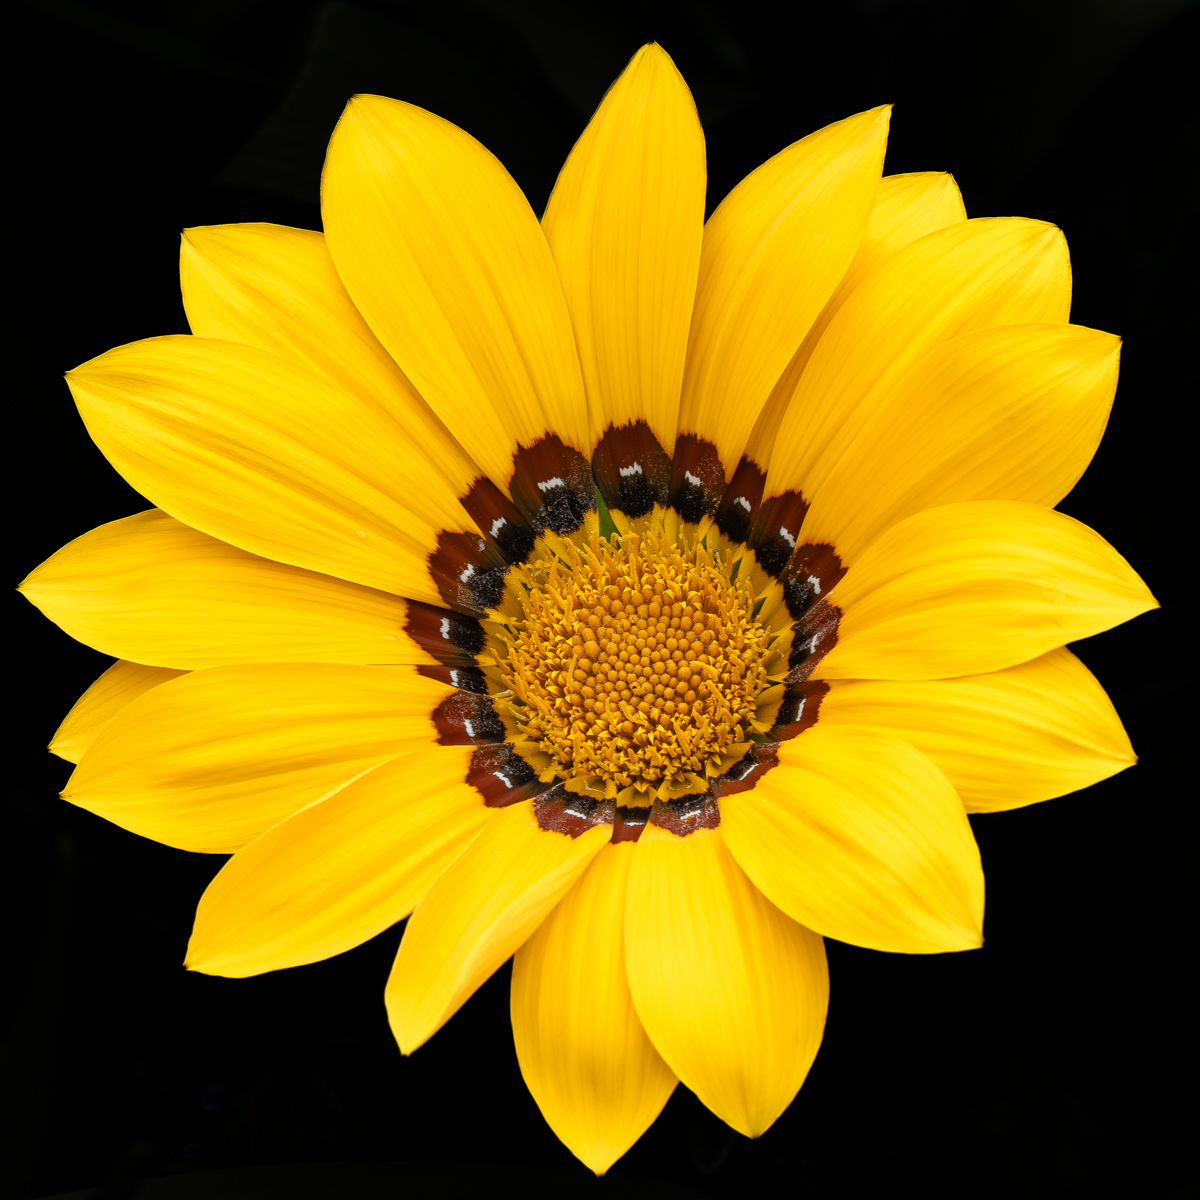 A Yellow Gazania for #SundayYellow #Flowers #Macro